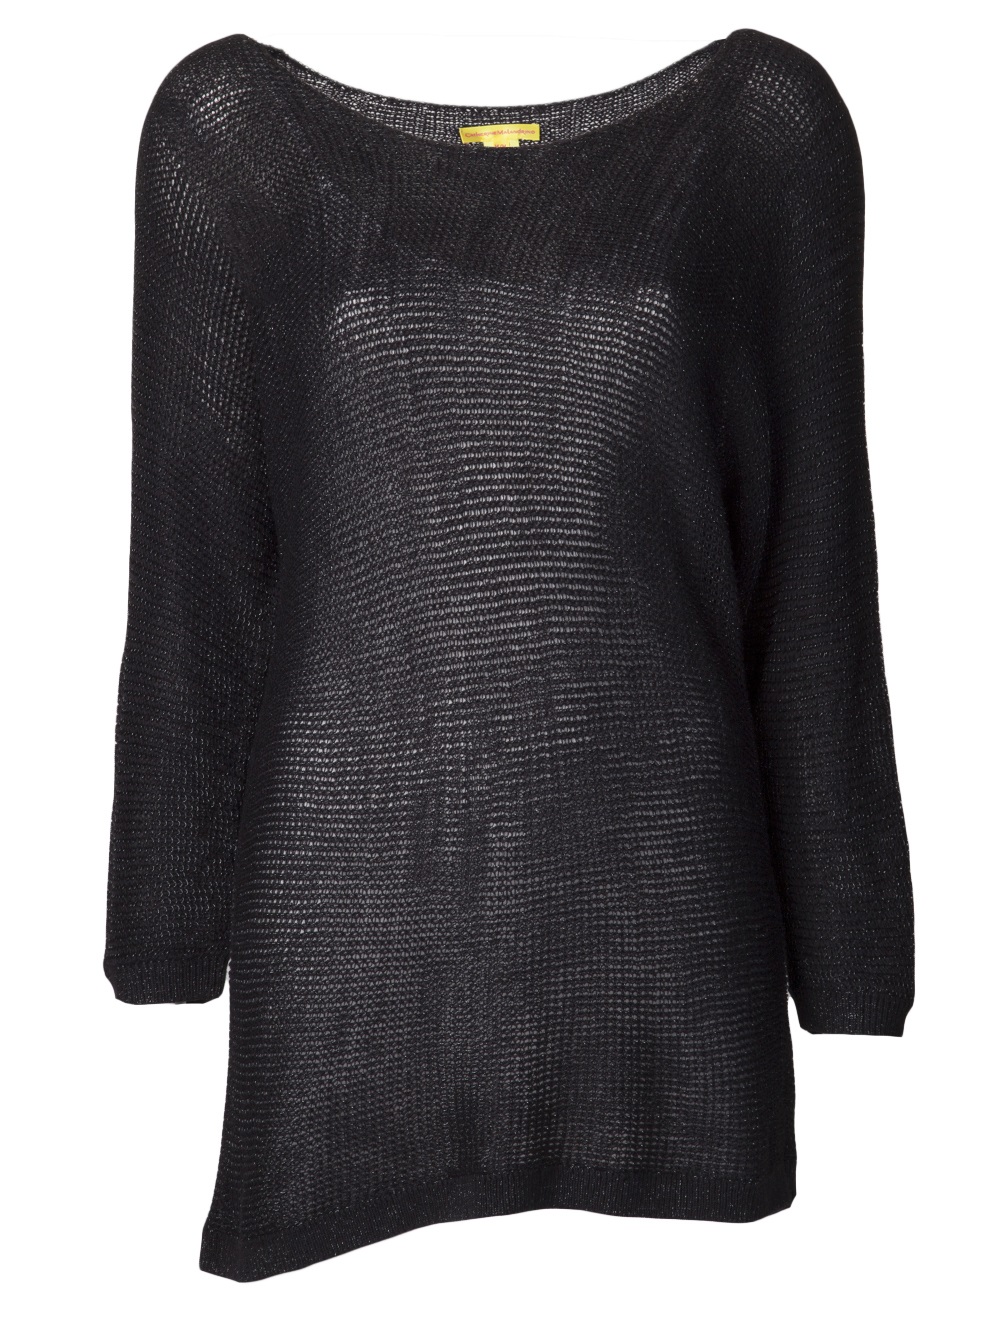 Lyst - Catherine Malandrino Scoop Neck Sweater in Black